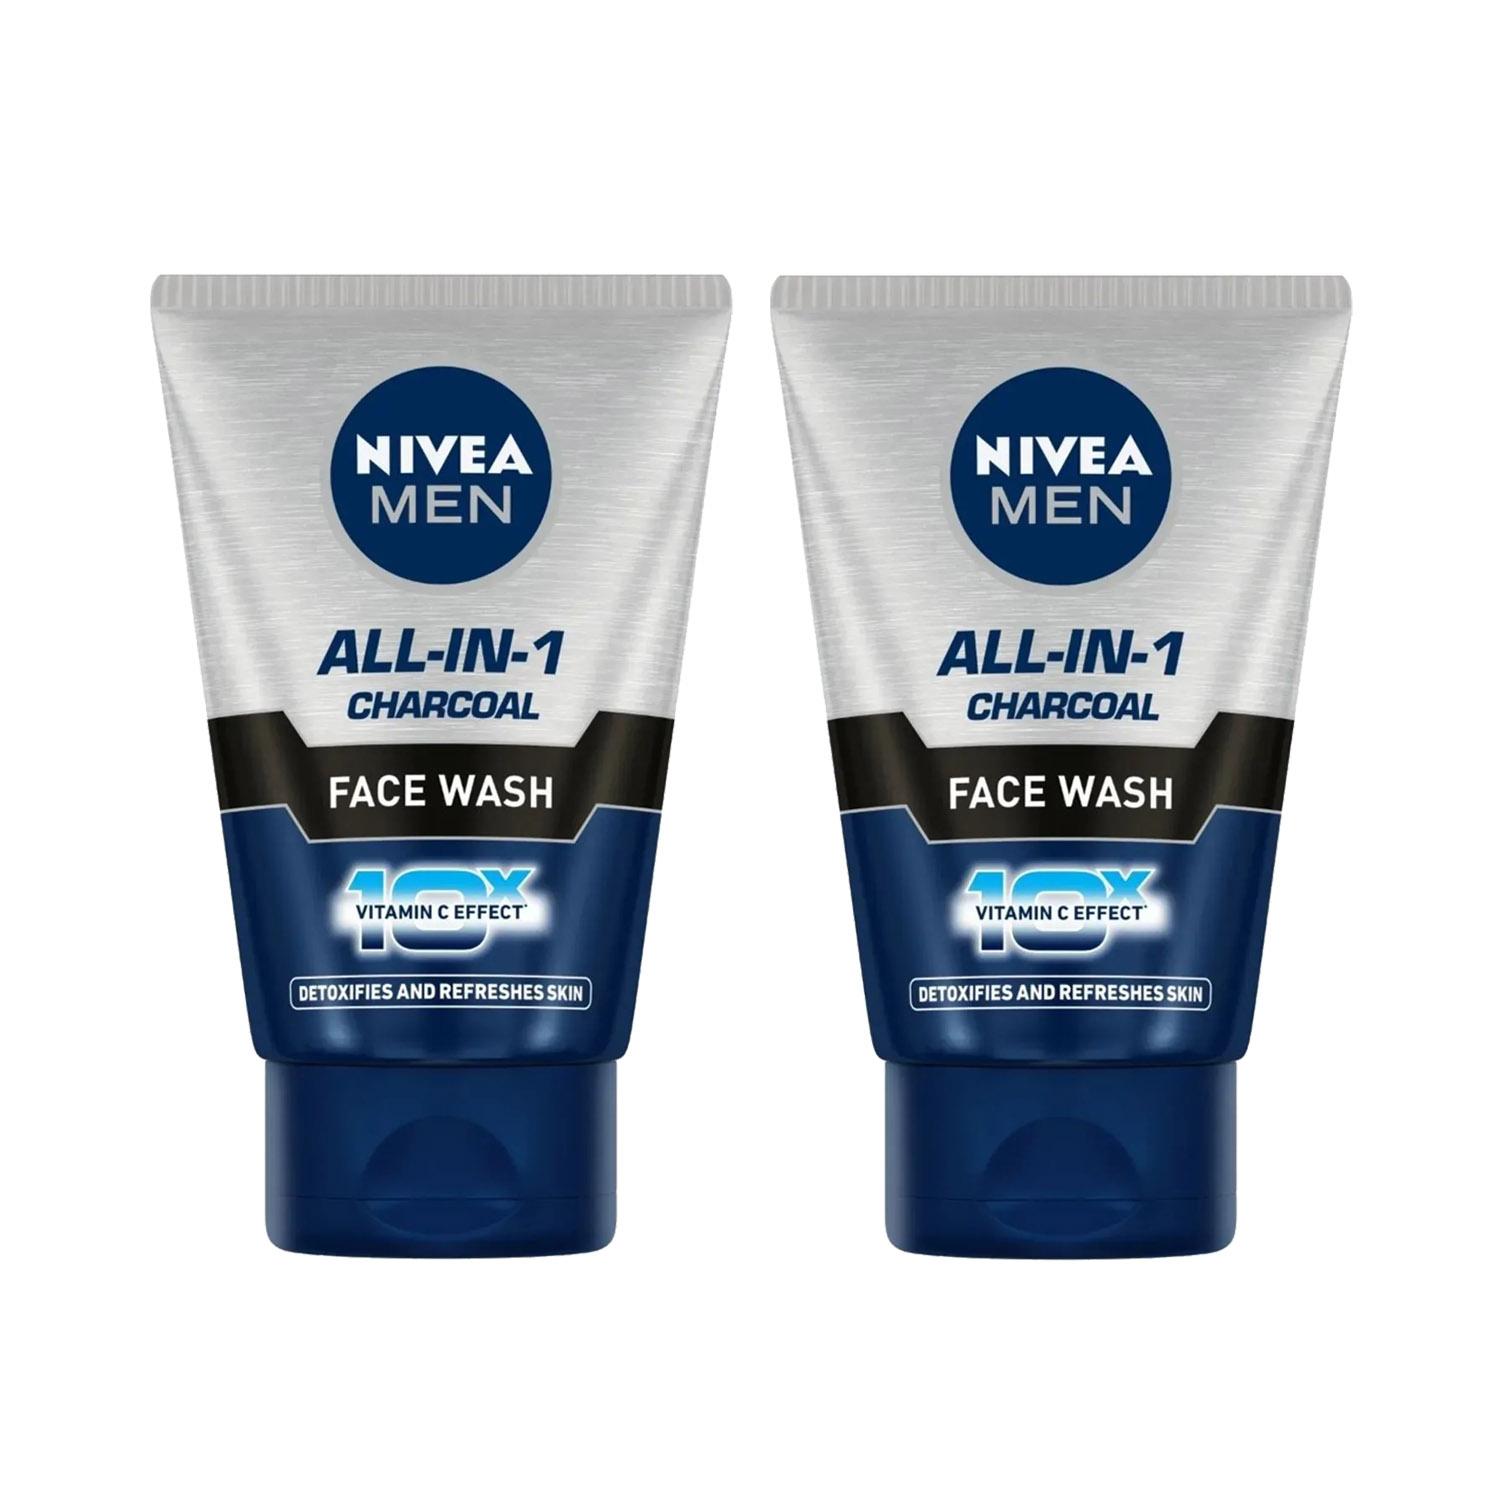 Nivea | Nivea Men All In 1 Facewash (100g) Tub - Pack of 2 Combo